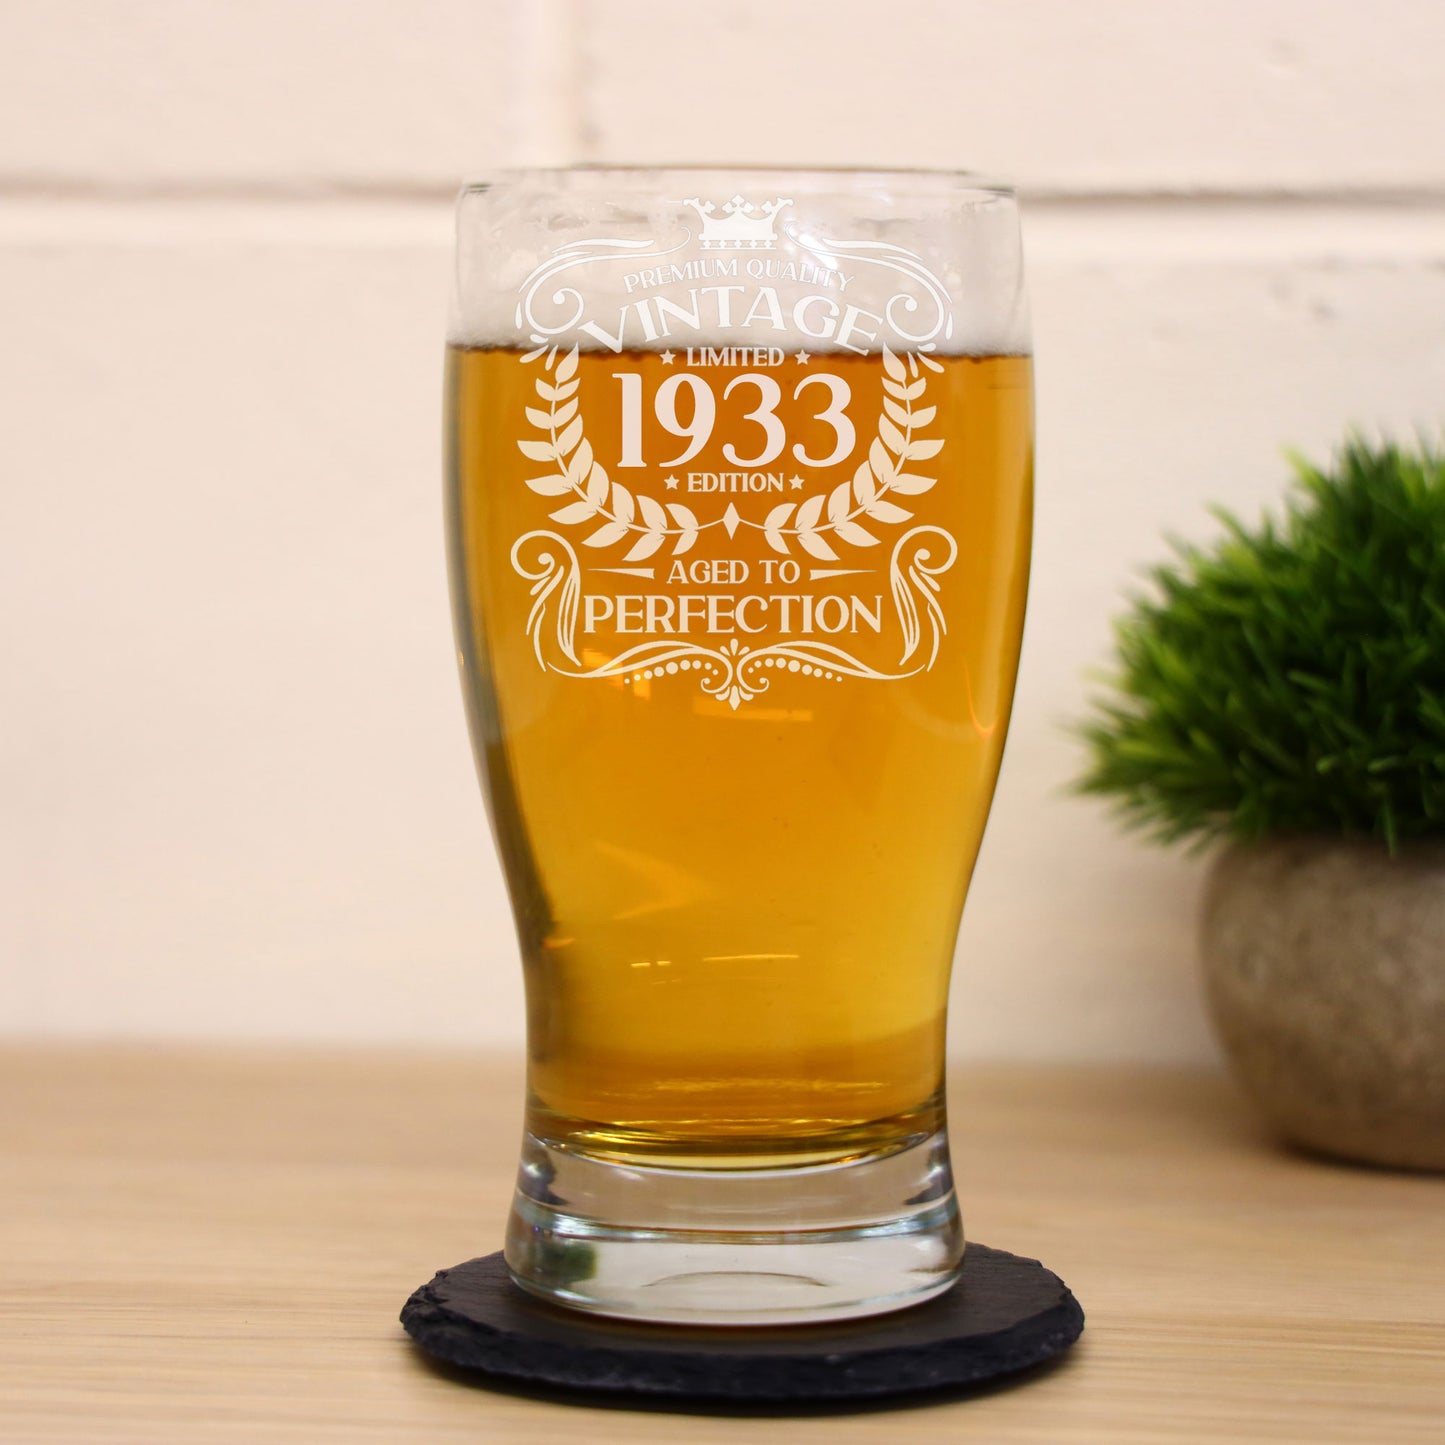 Vintage 1933 90th Birthday Engraved Beer Pint Glass Gift  - Always Looking Good -   